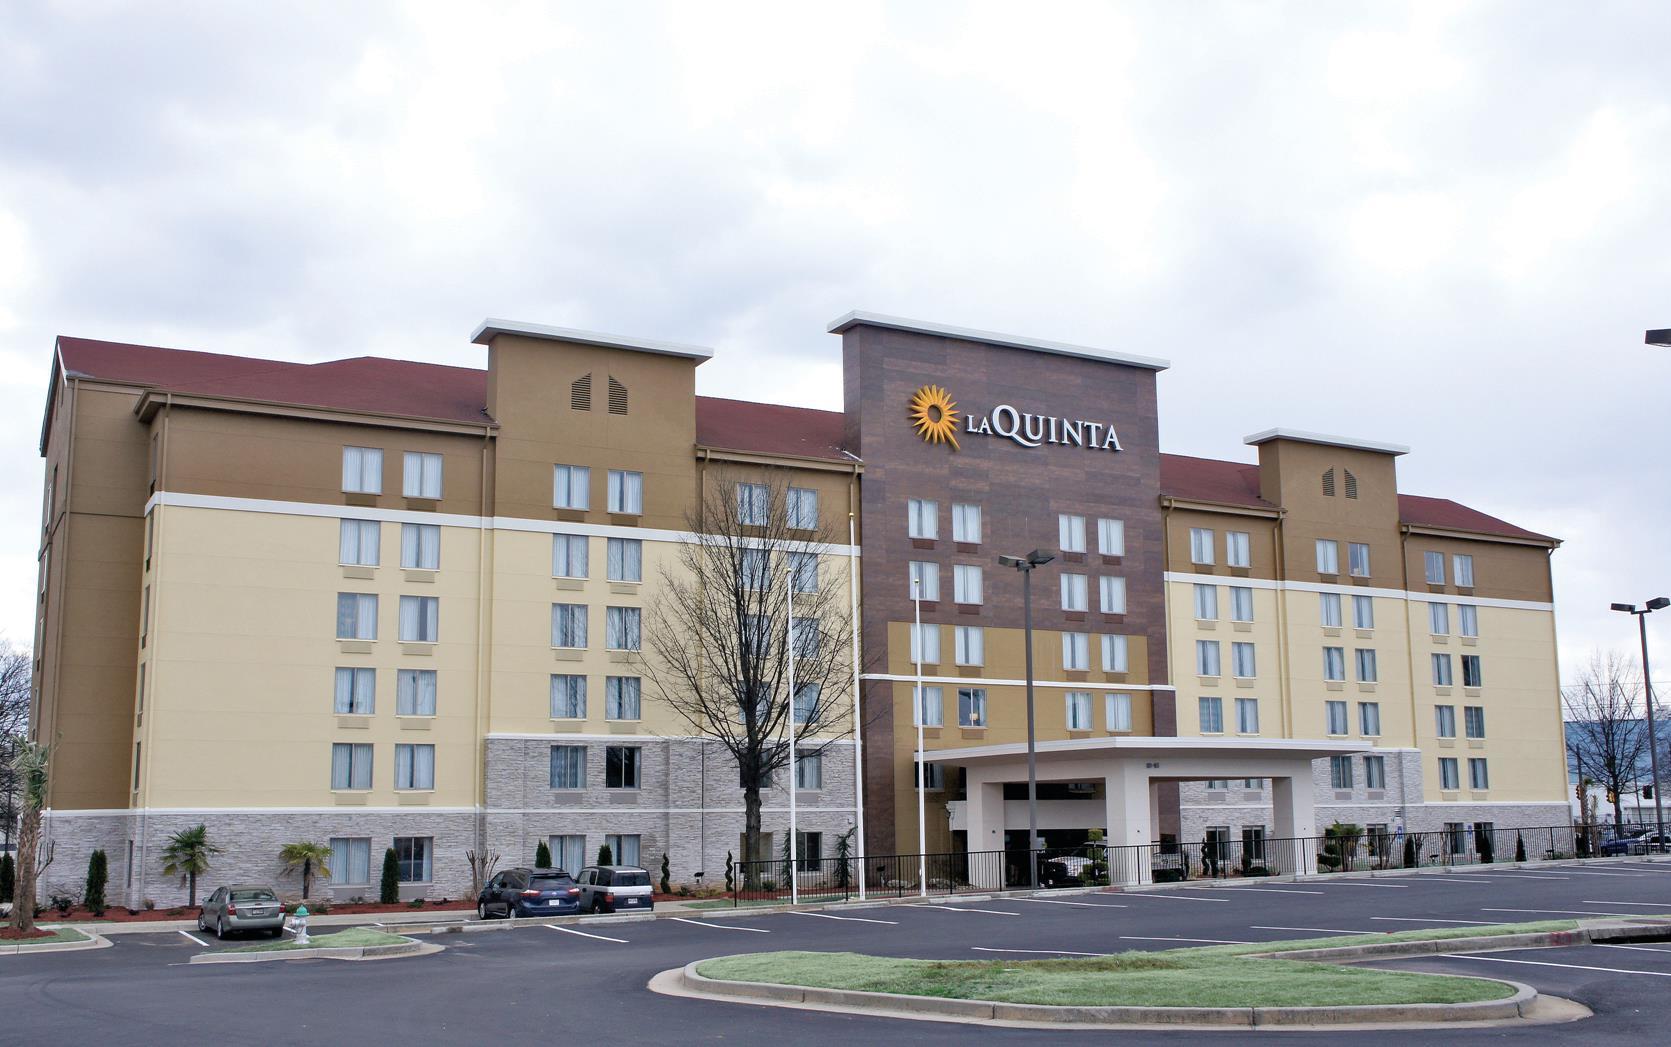 Photo of La Quinta Inn & Suites Atlanta Airport North, Atlanta, GA